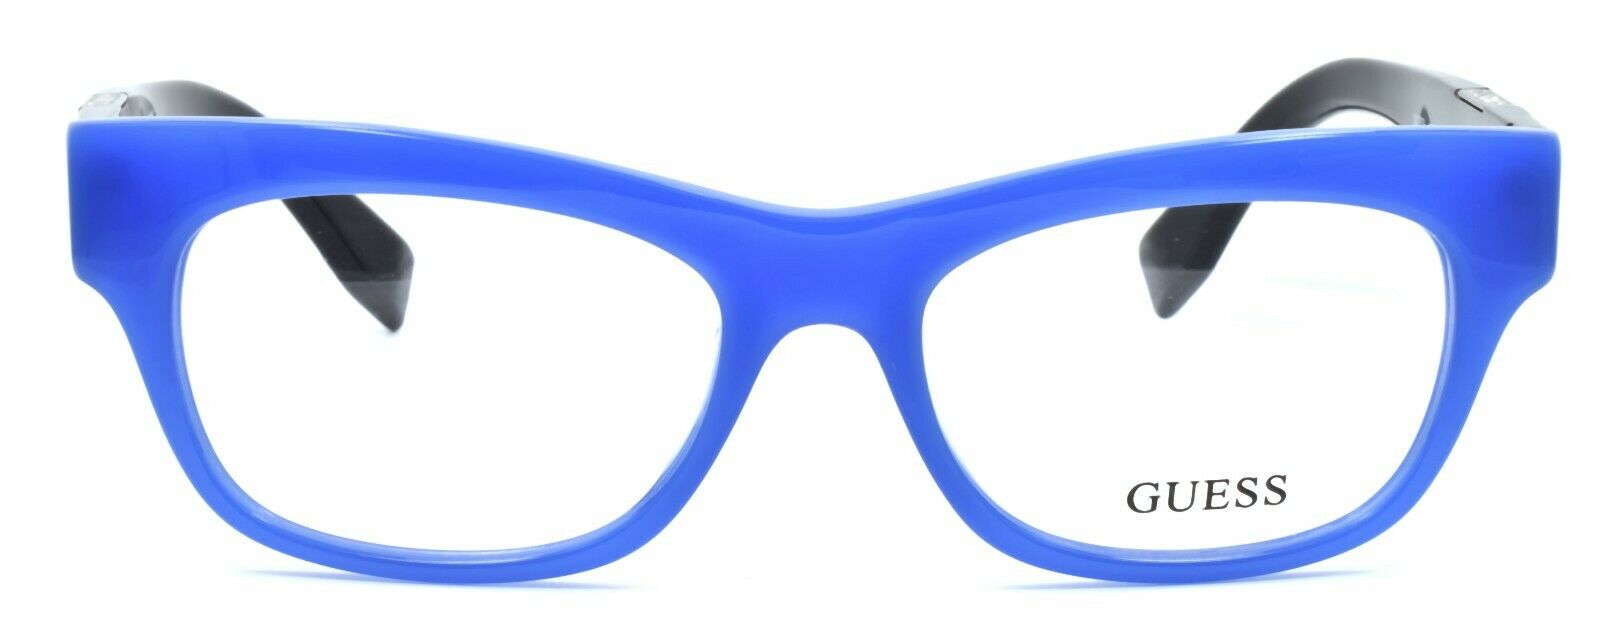 2-GUESS GU2575 090 Women's Eyeglasses Frames 51-17-135 Blue / Black + CASE-664689792047-IKSpecs